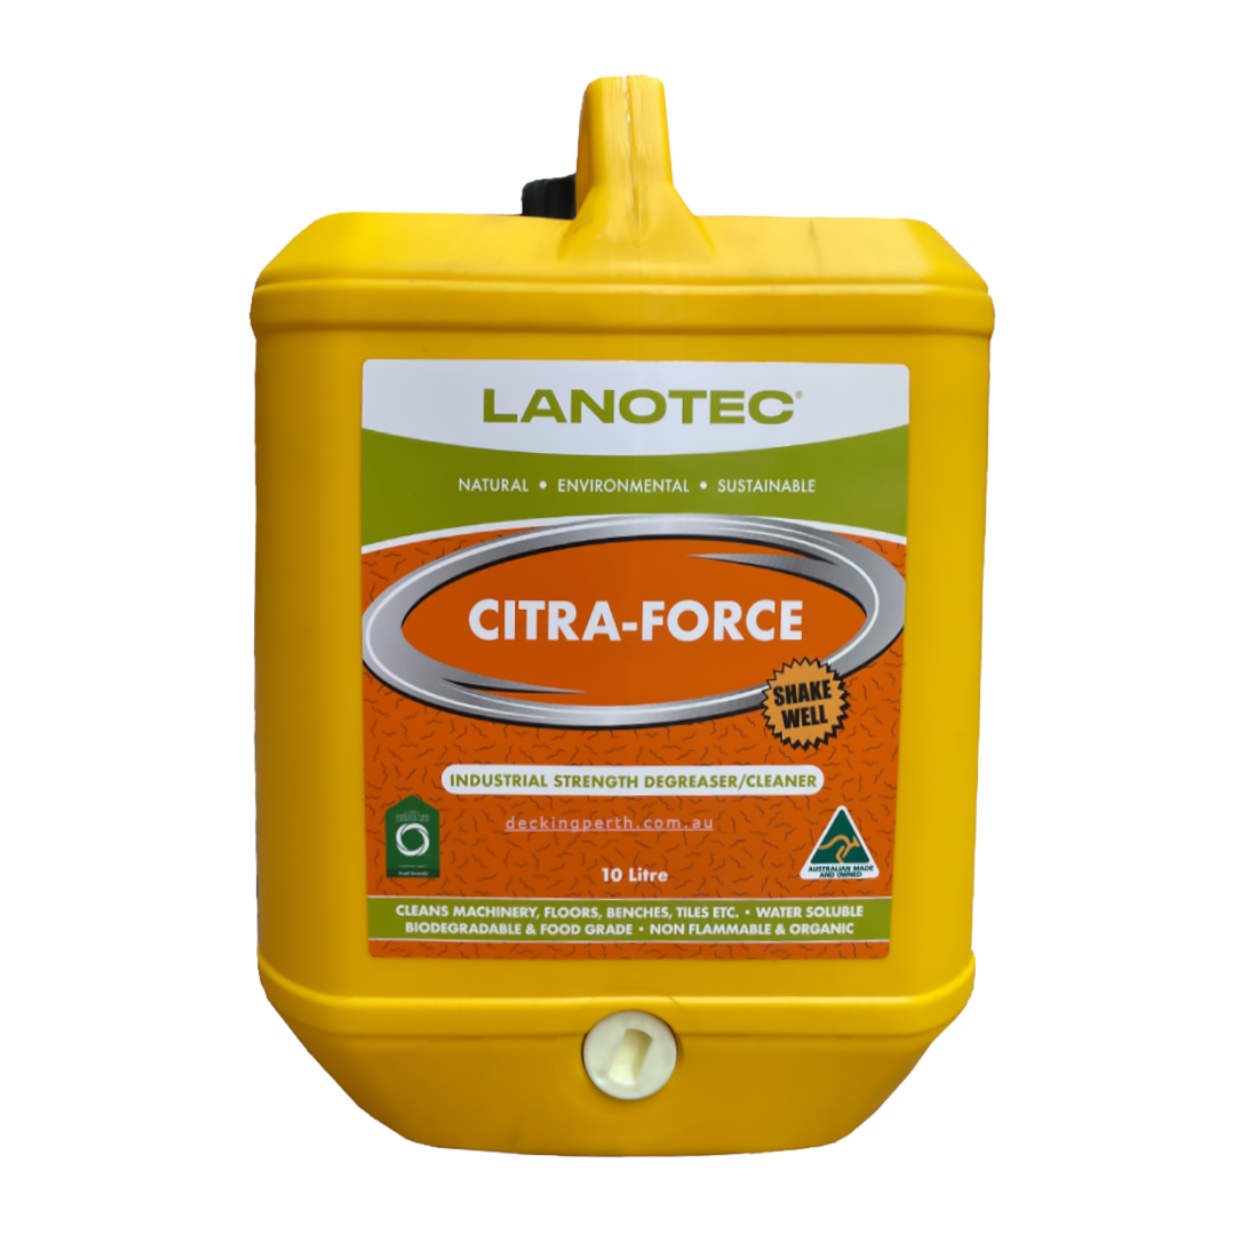 Lanotec_Citra_Force_10_litre_Decking_Perth